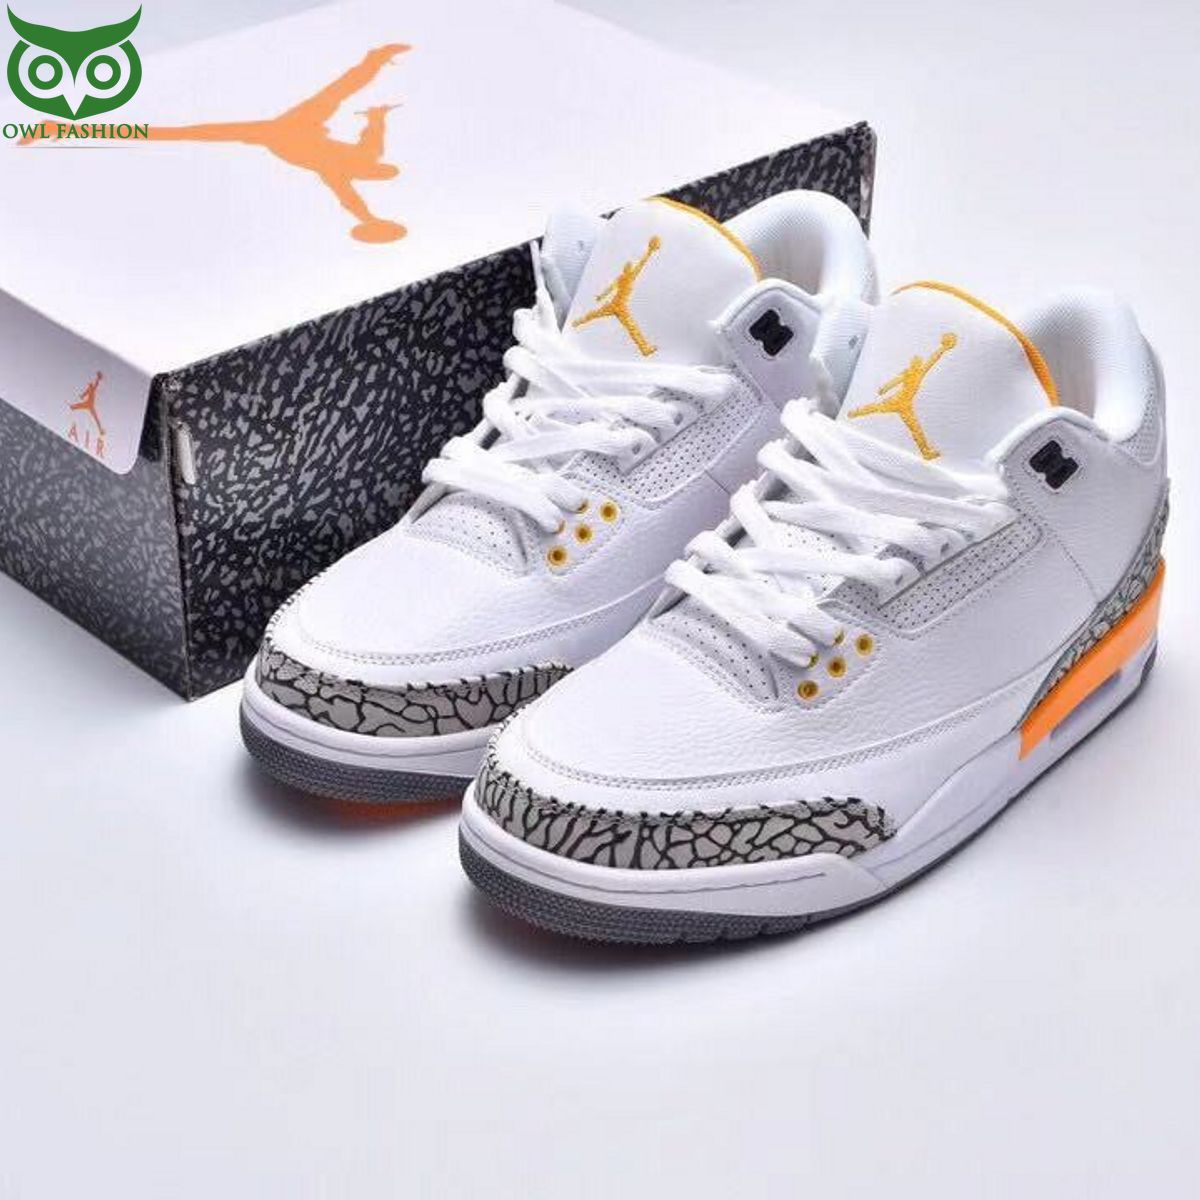 Nike Air Jordan 3 Laser Orange Lakers Shoes Sneakers Lovely smile